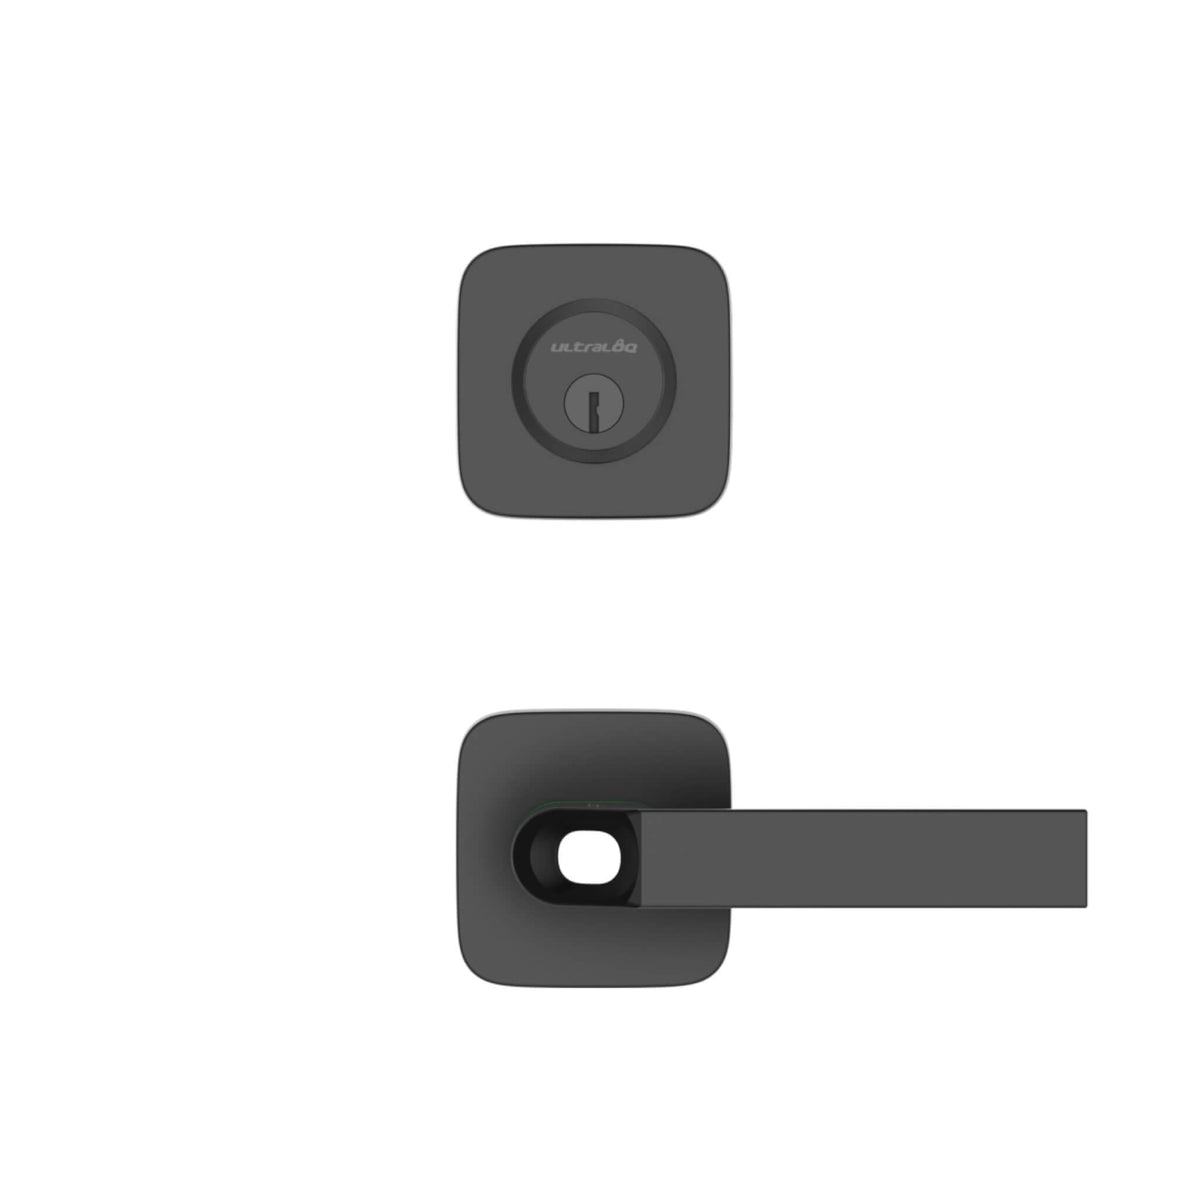 Ultraloq Combo Smart Door Lock Installation